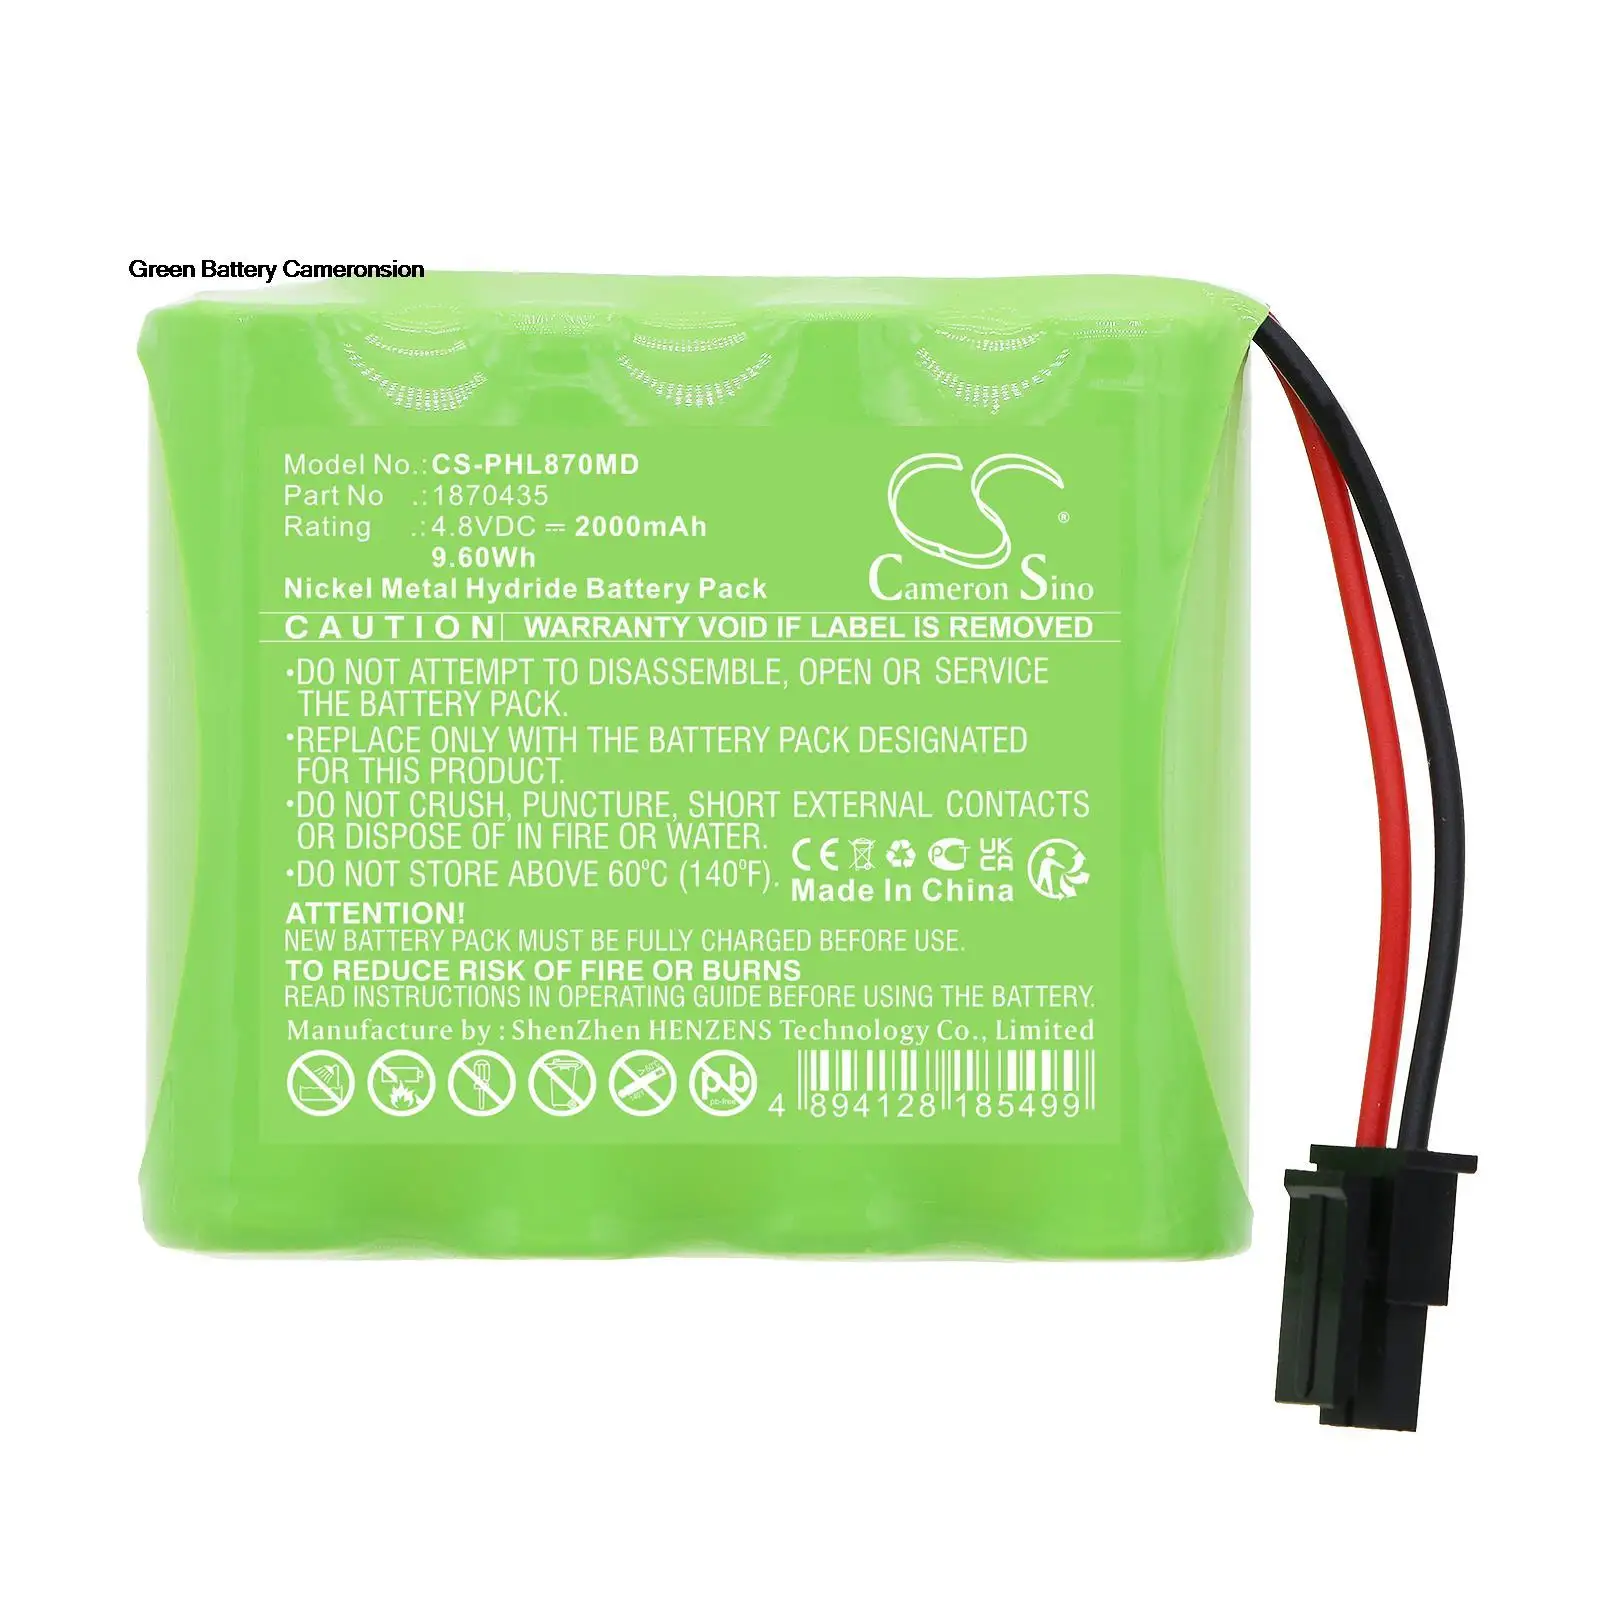 

GreenBattery CameronSino 2000mAh 9.6Wh 4.8V Medical Ni-MH Battery for Philips Lifeline GoSafe Mobile Alert System 870435,1870435